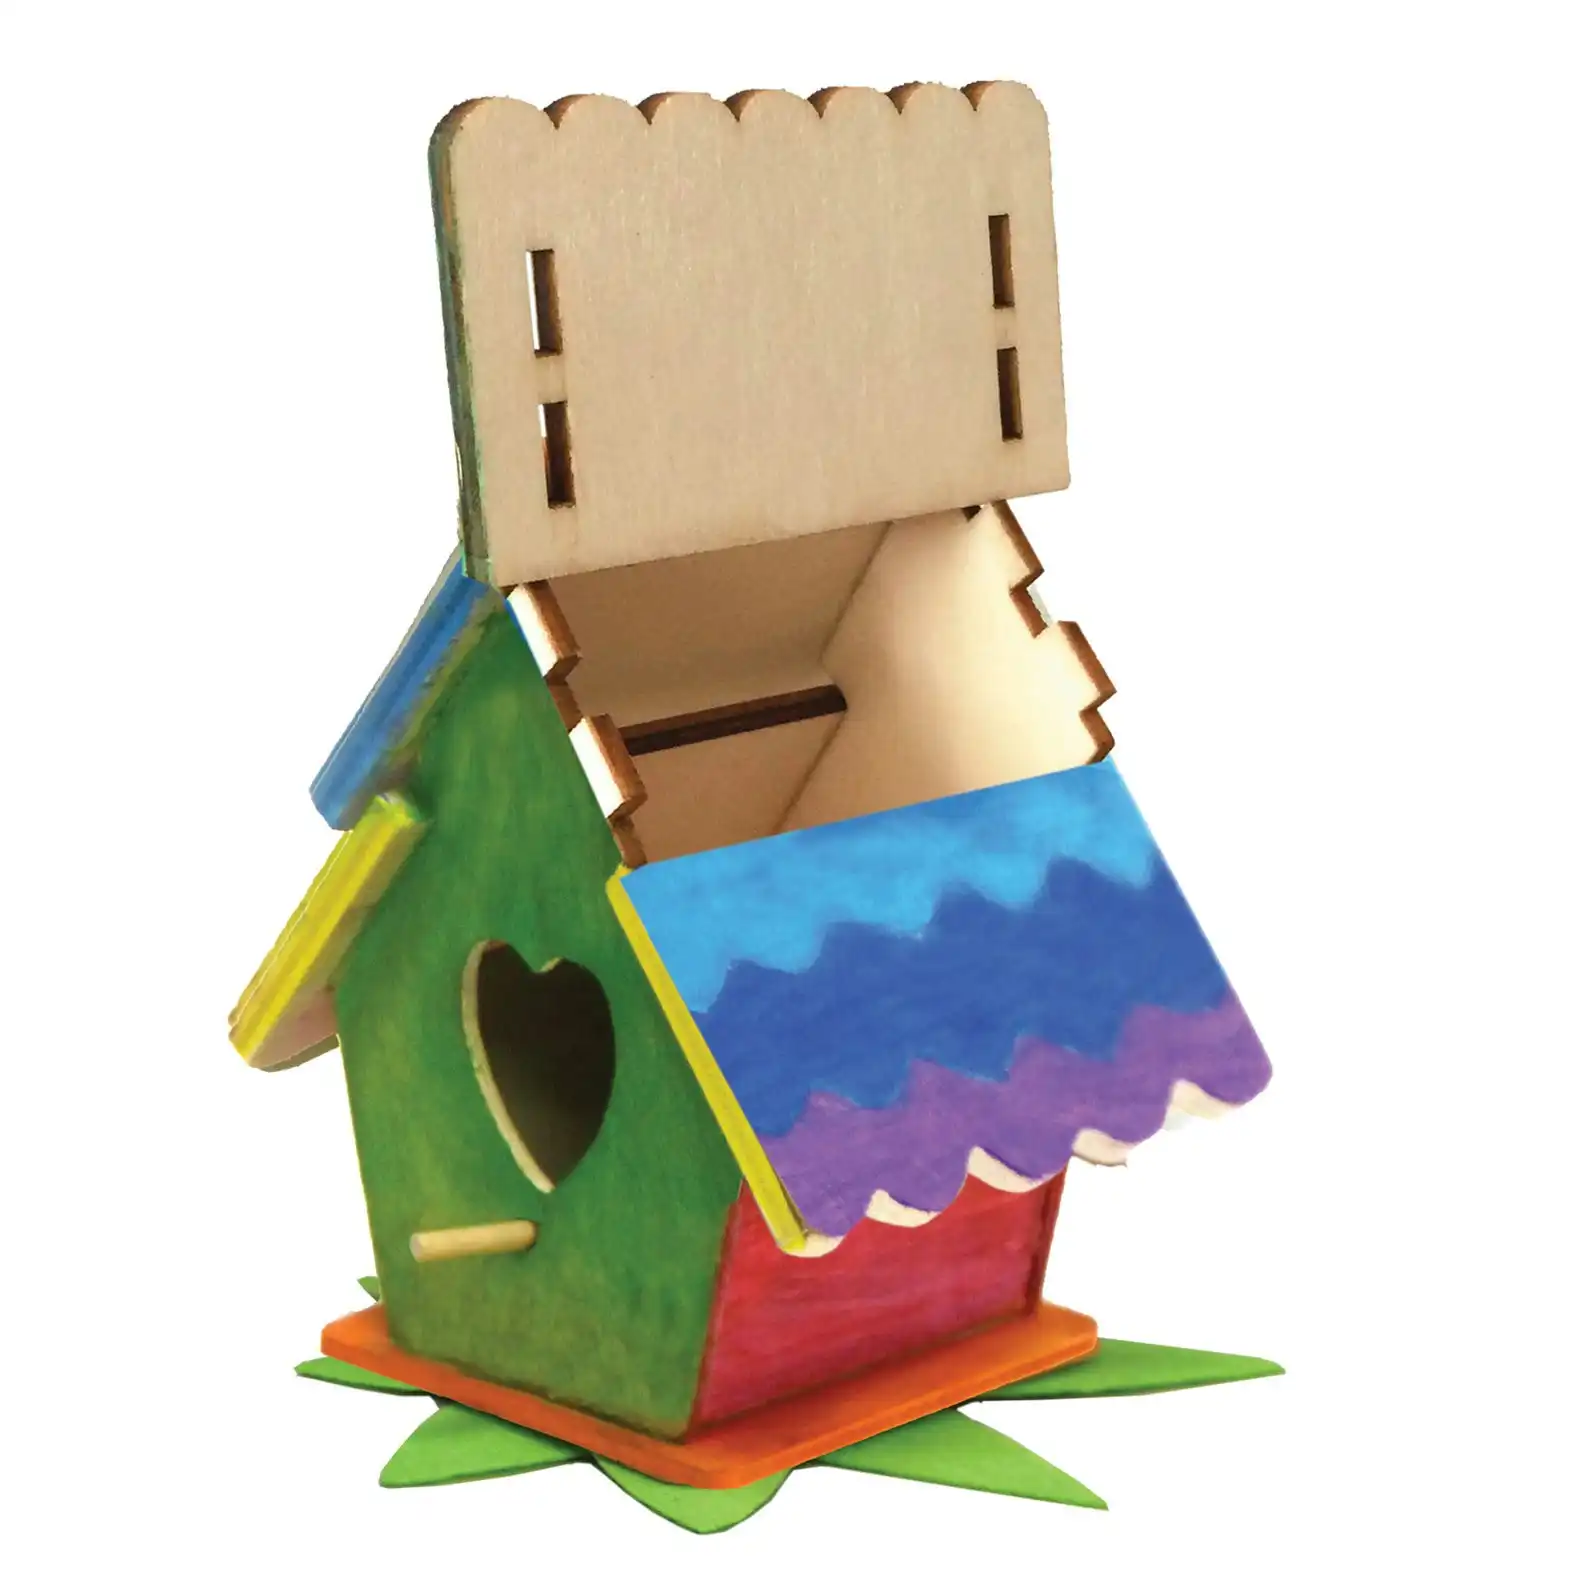 Boyle Crafty Kits Build & Paint Wooden Birdhouse Kids/Children Activity Toy 5y+